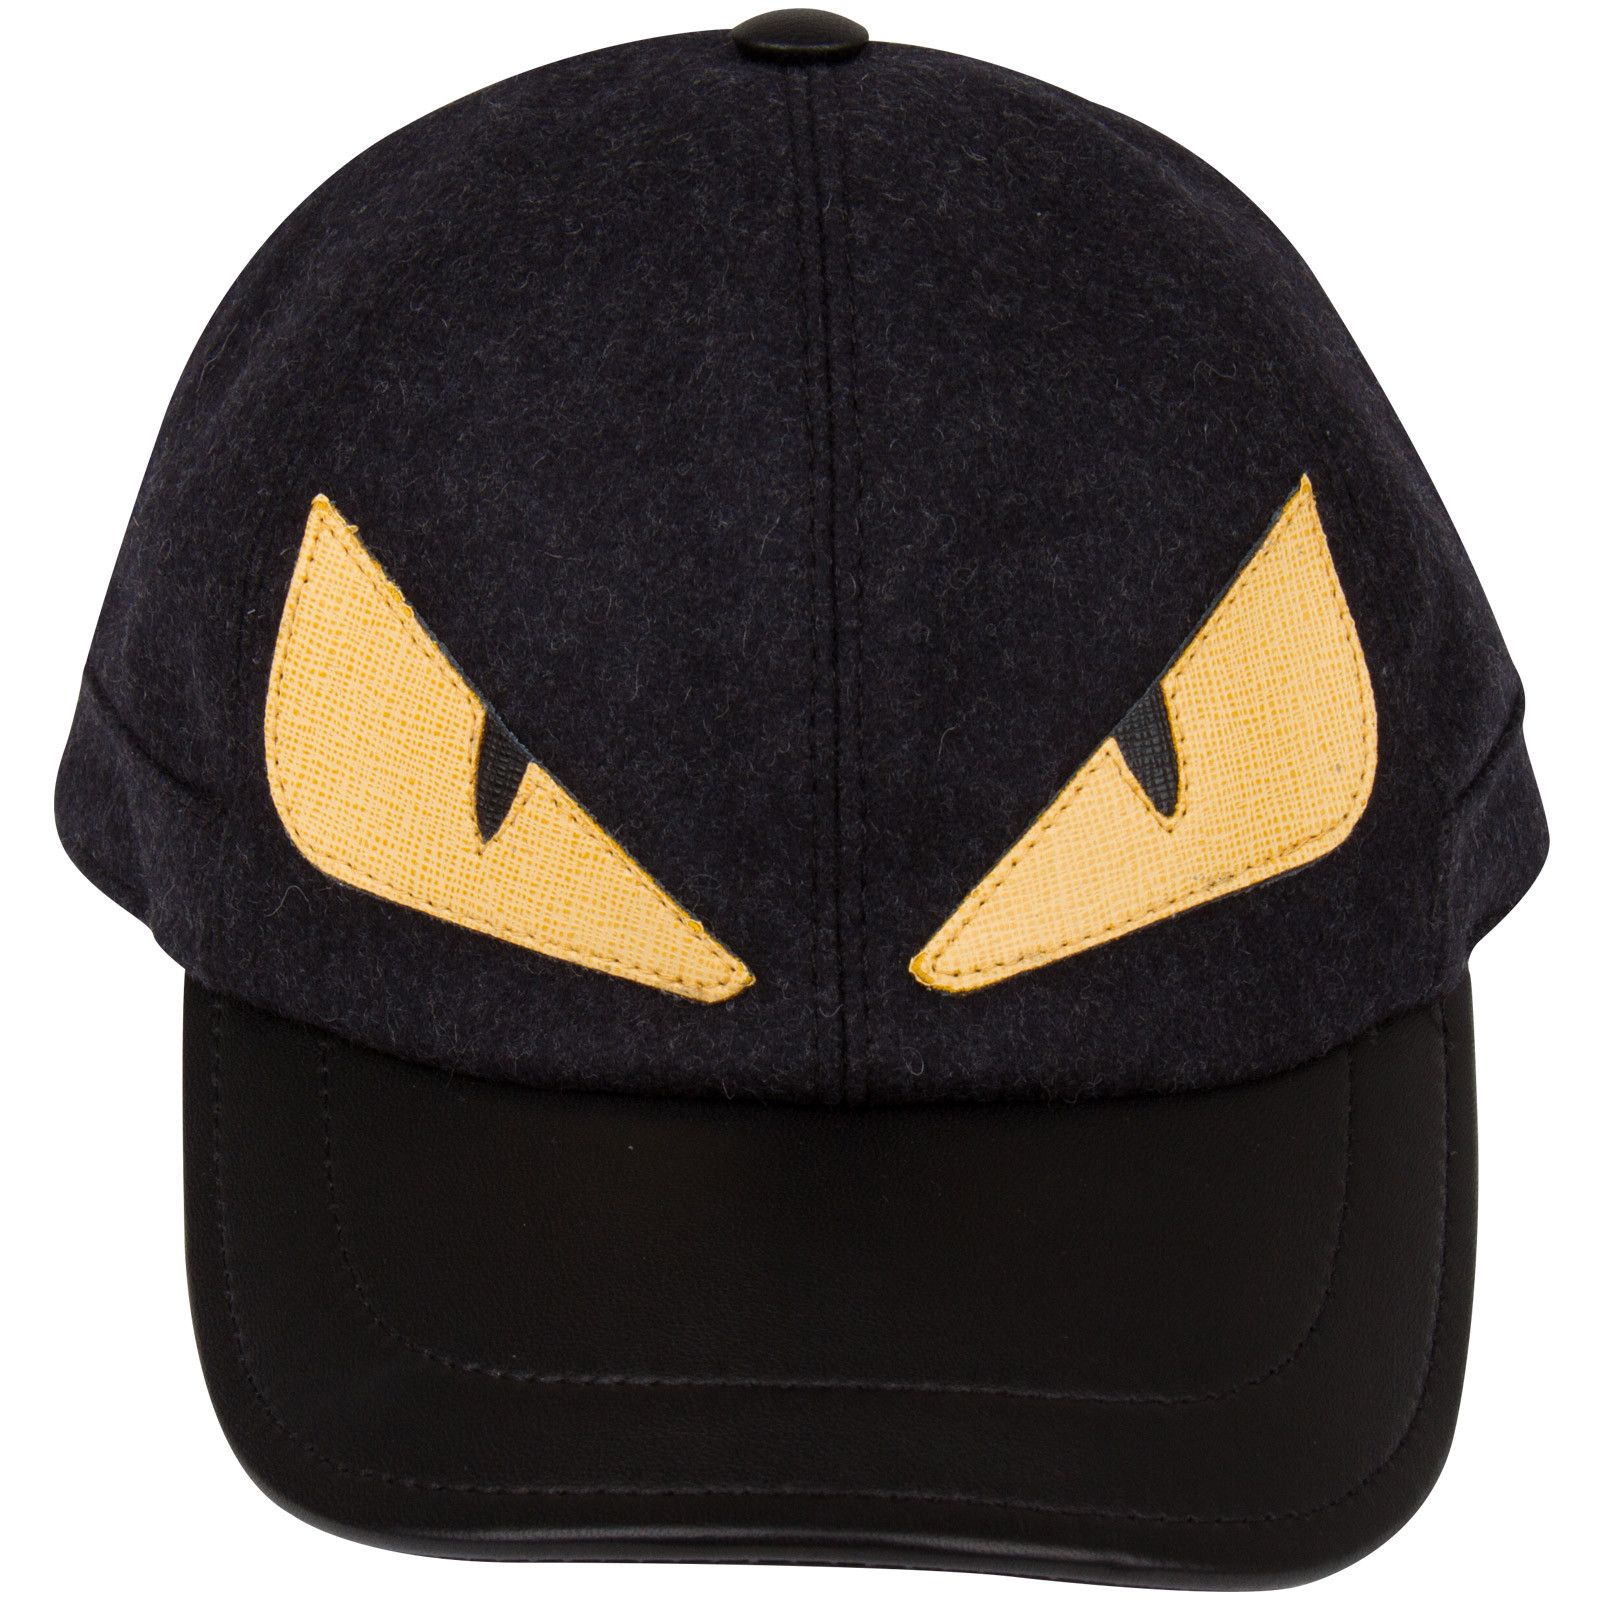 Boys Grey&Black Hat With Yellow Eye Logo - CÉMAROSE | Children's Fashion Store - 2